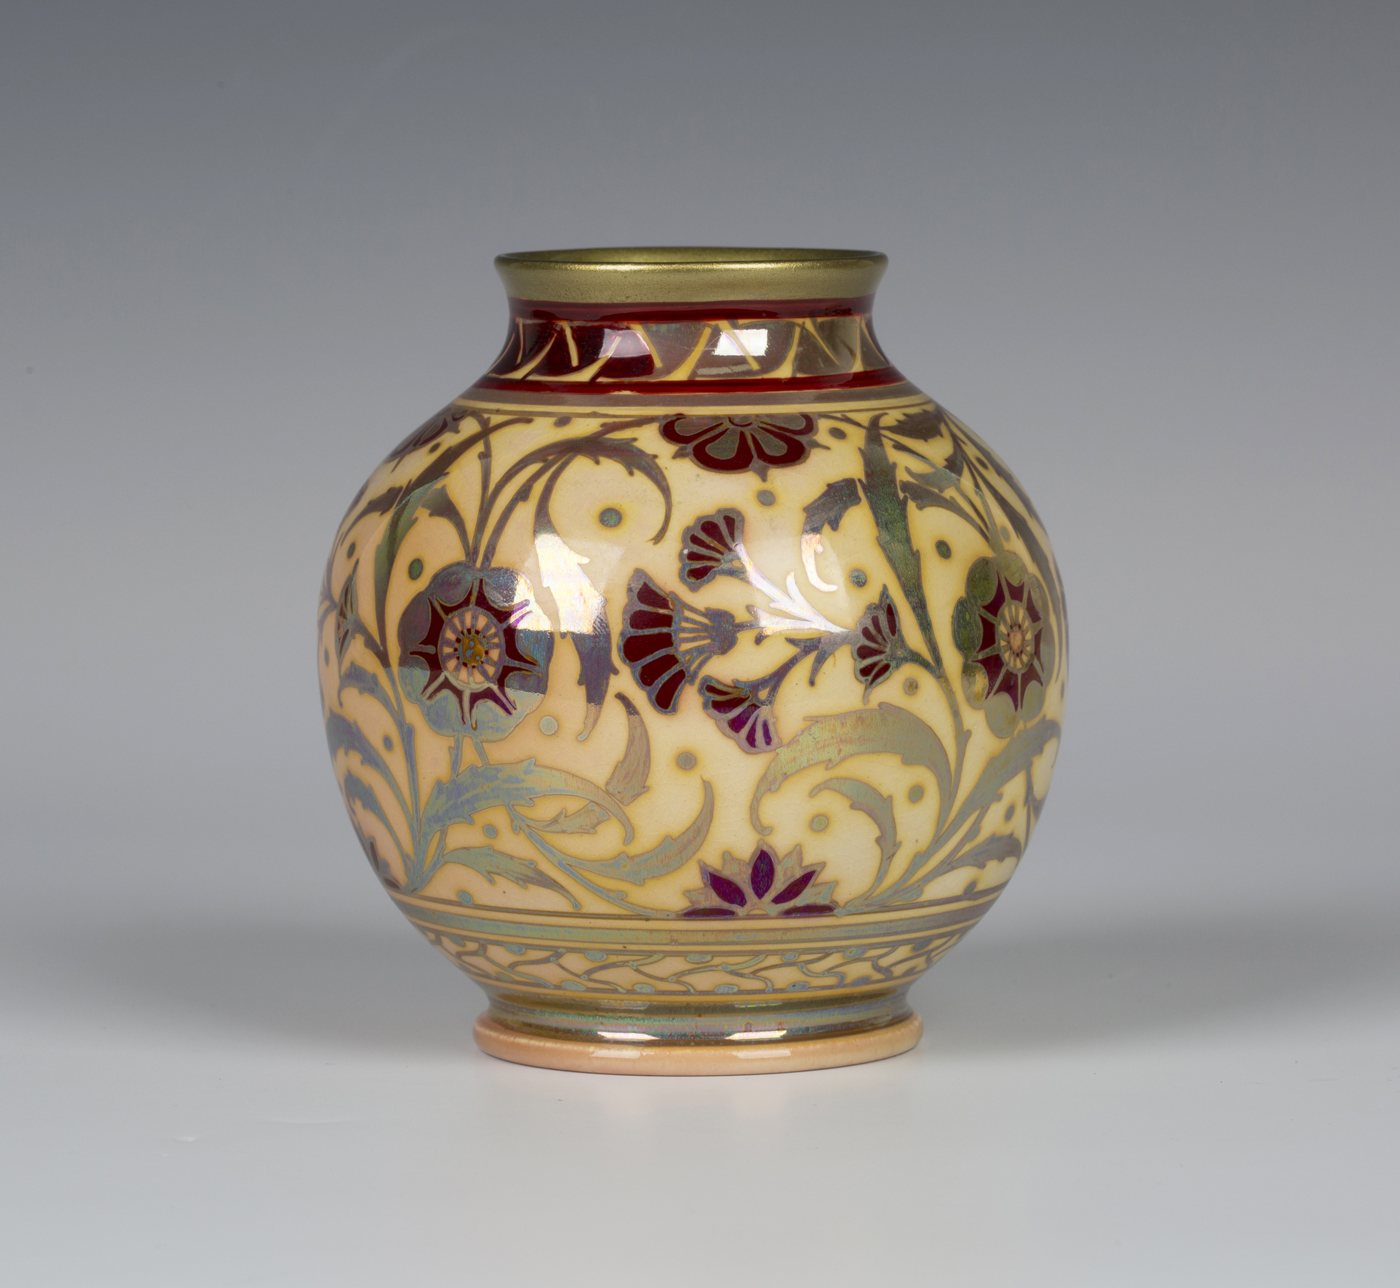 A Pilkington's Royal Lancastrian lustre vase, circa 1908, by William S. Mycock, monogrammed, the